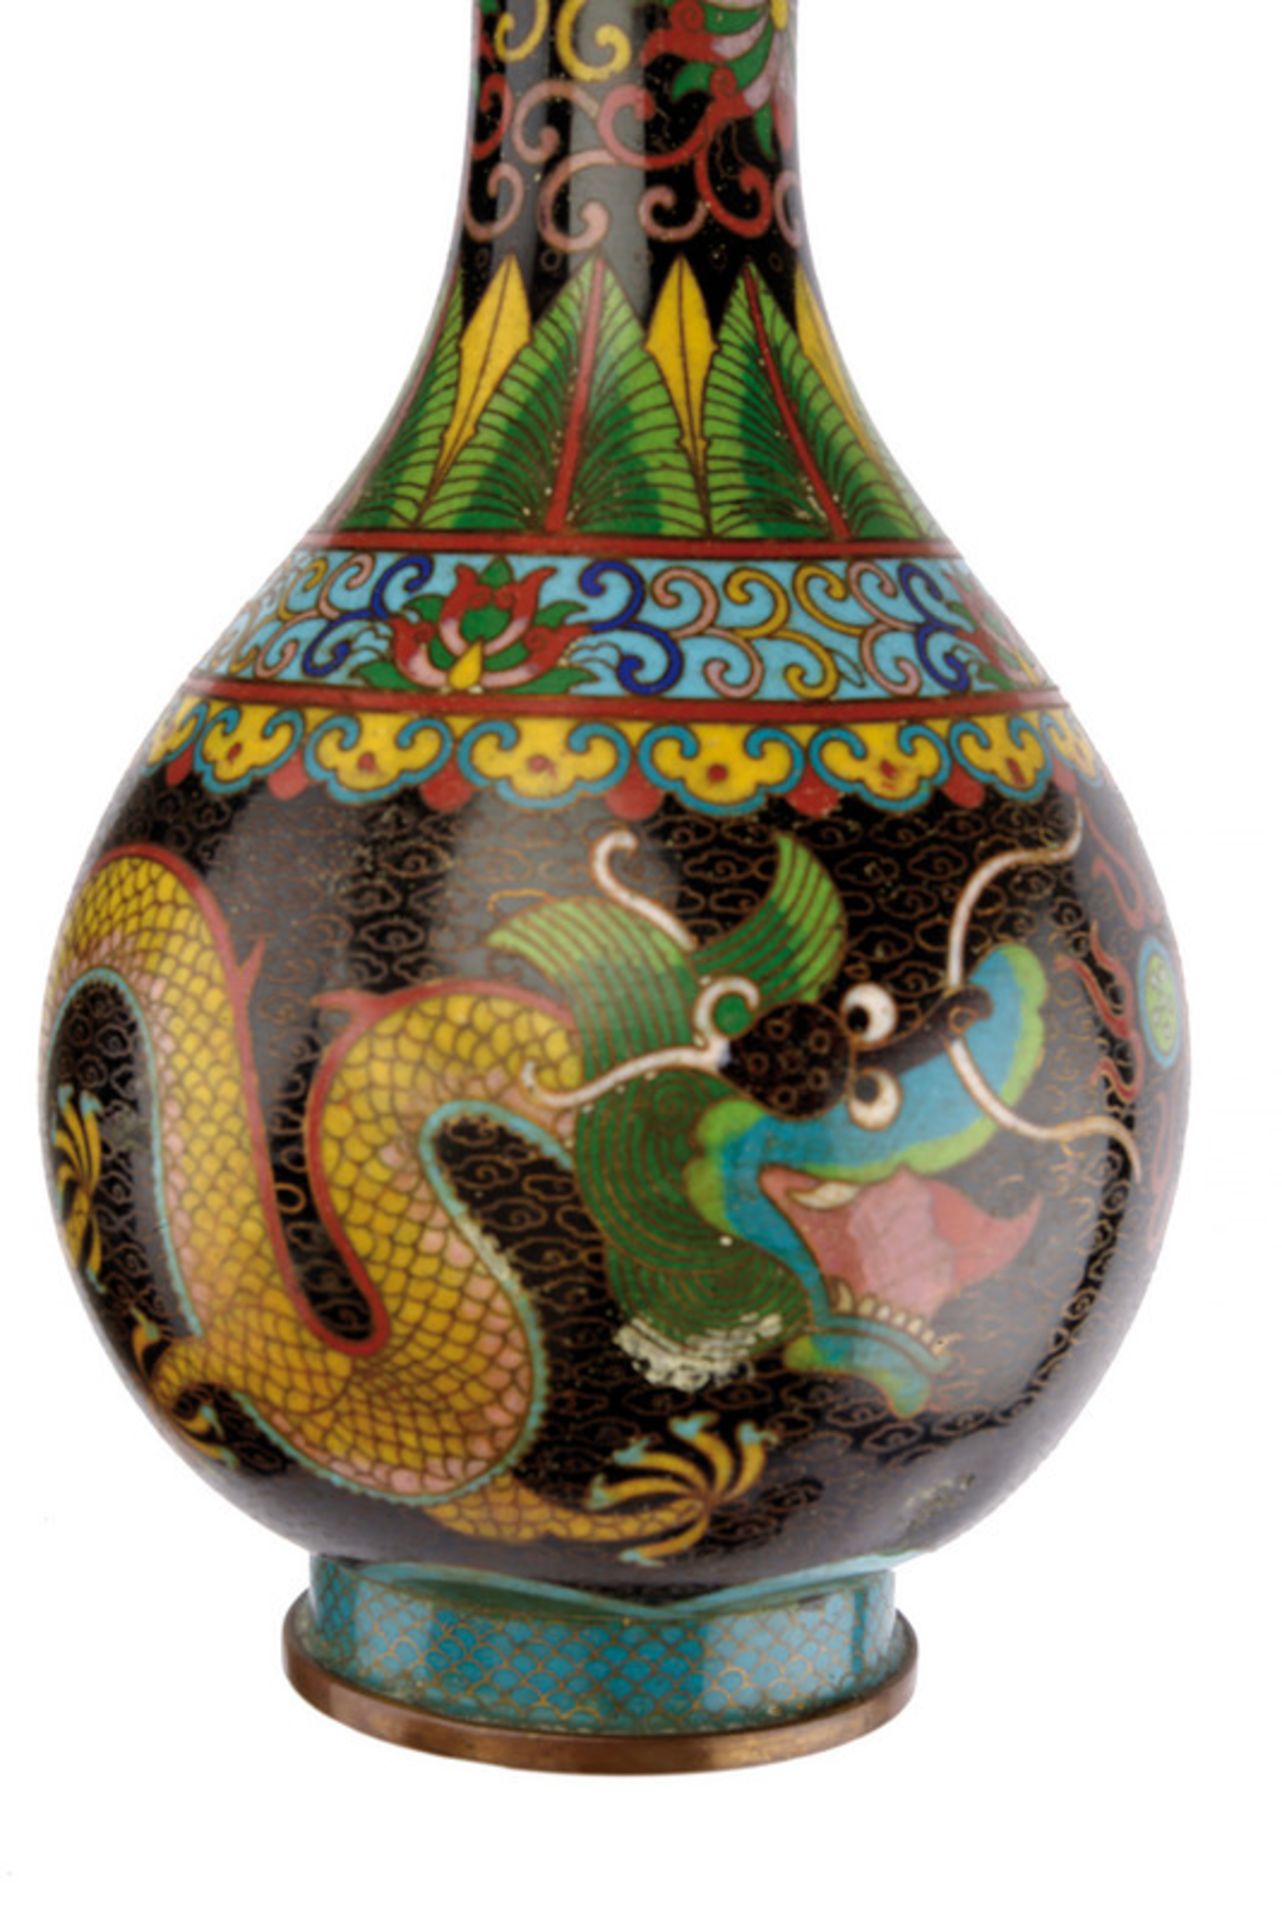 A pair of cloisonnÃ© vases, dating: circa 1900, provenance: China, dating: circa 1900, provenance: - Image 2 of 3